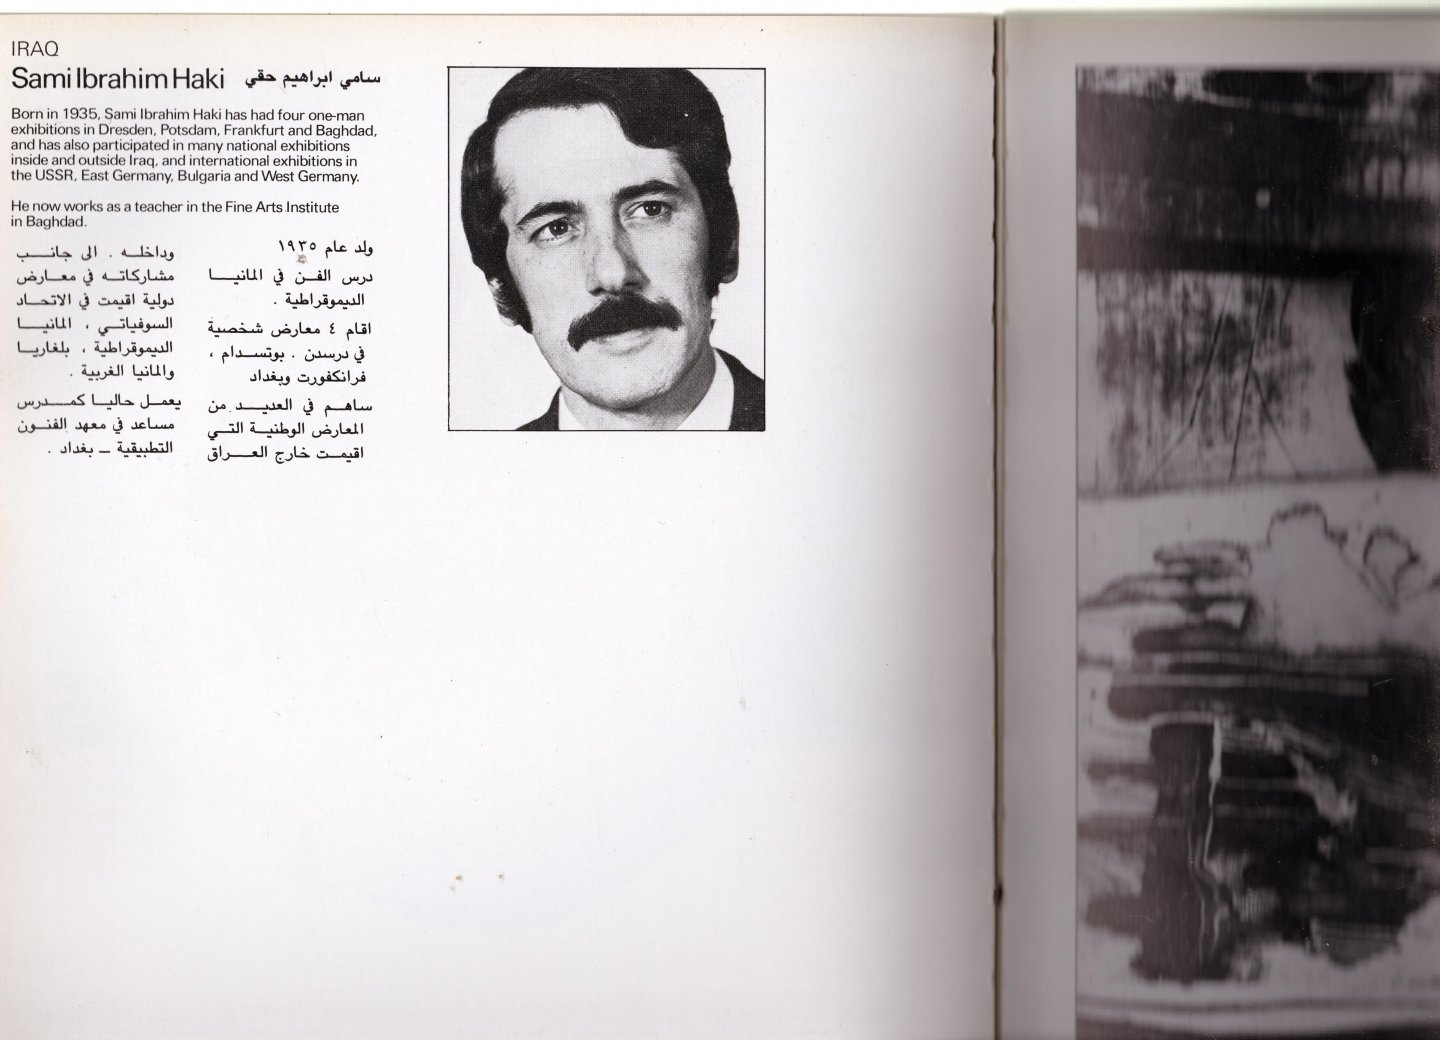 geen - Contemporary Arab Graphics 1978 Catalogus